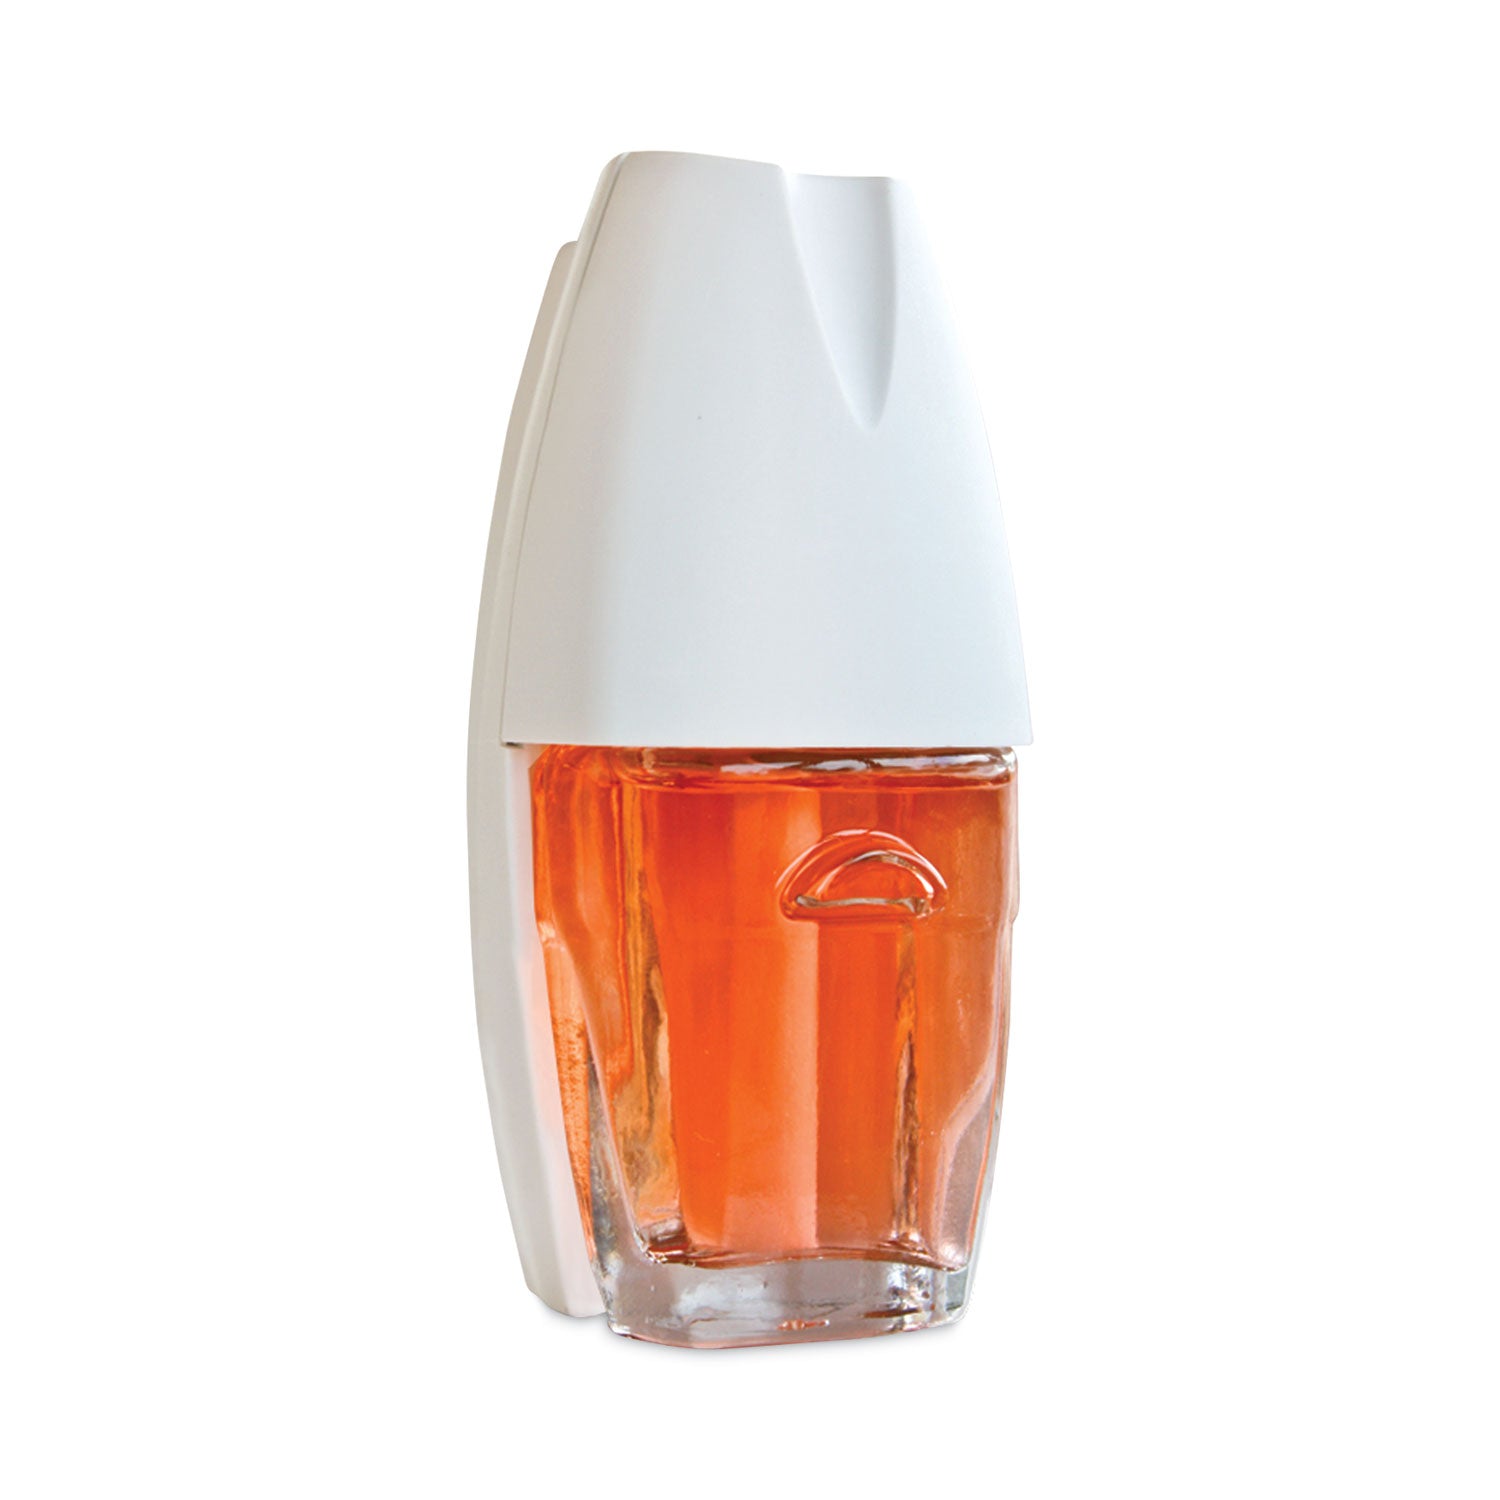 electric-scented-oil-air-freshener-refill-hawaiian-blossoms-and-papaya-067-oz-bottle-5-pack-6-pack-carton_bri900668ct - 3